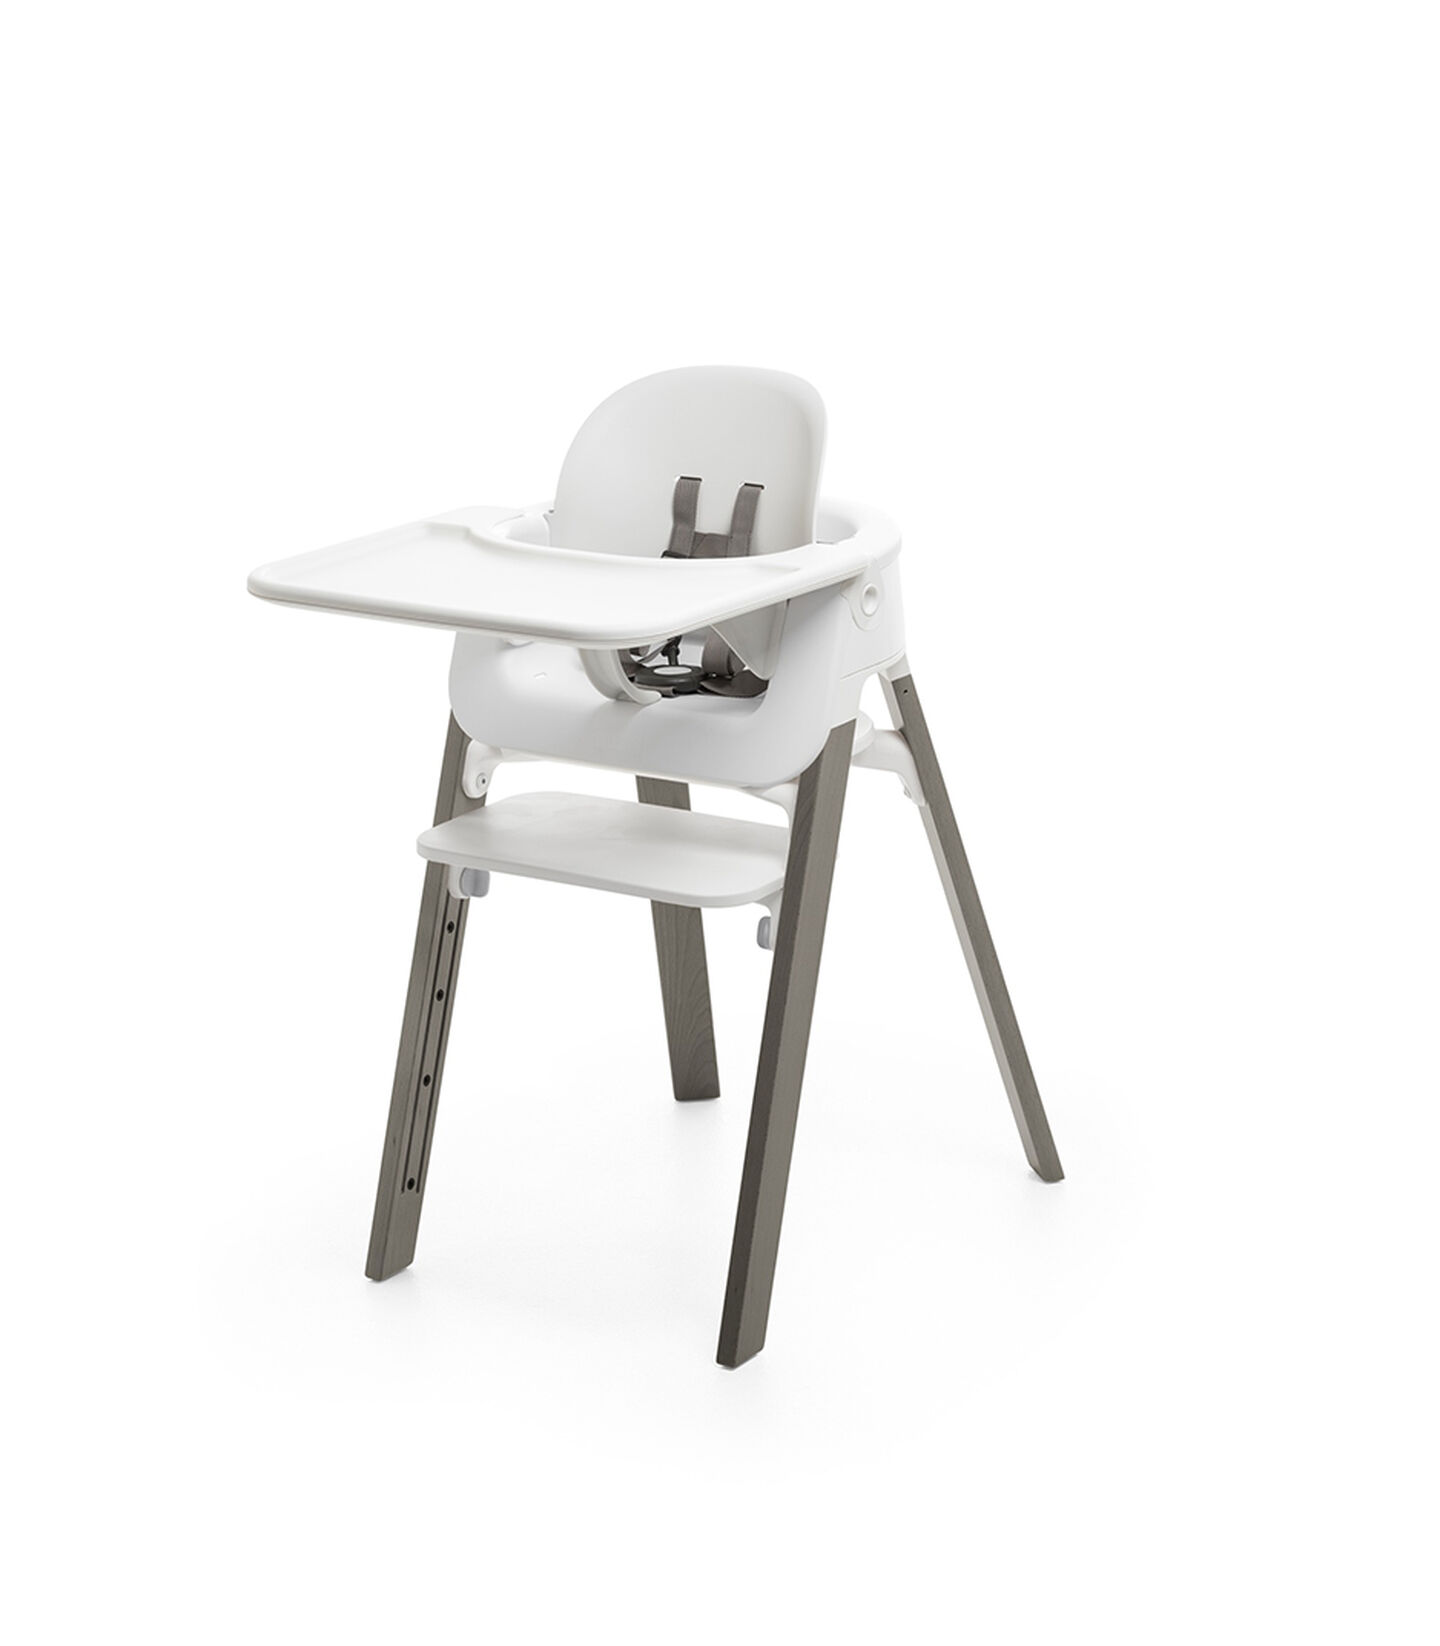 Stokke® Steps™ Chair White Hazy Grey, White/Hazy Grey, mainview view 5